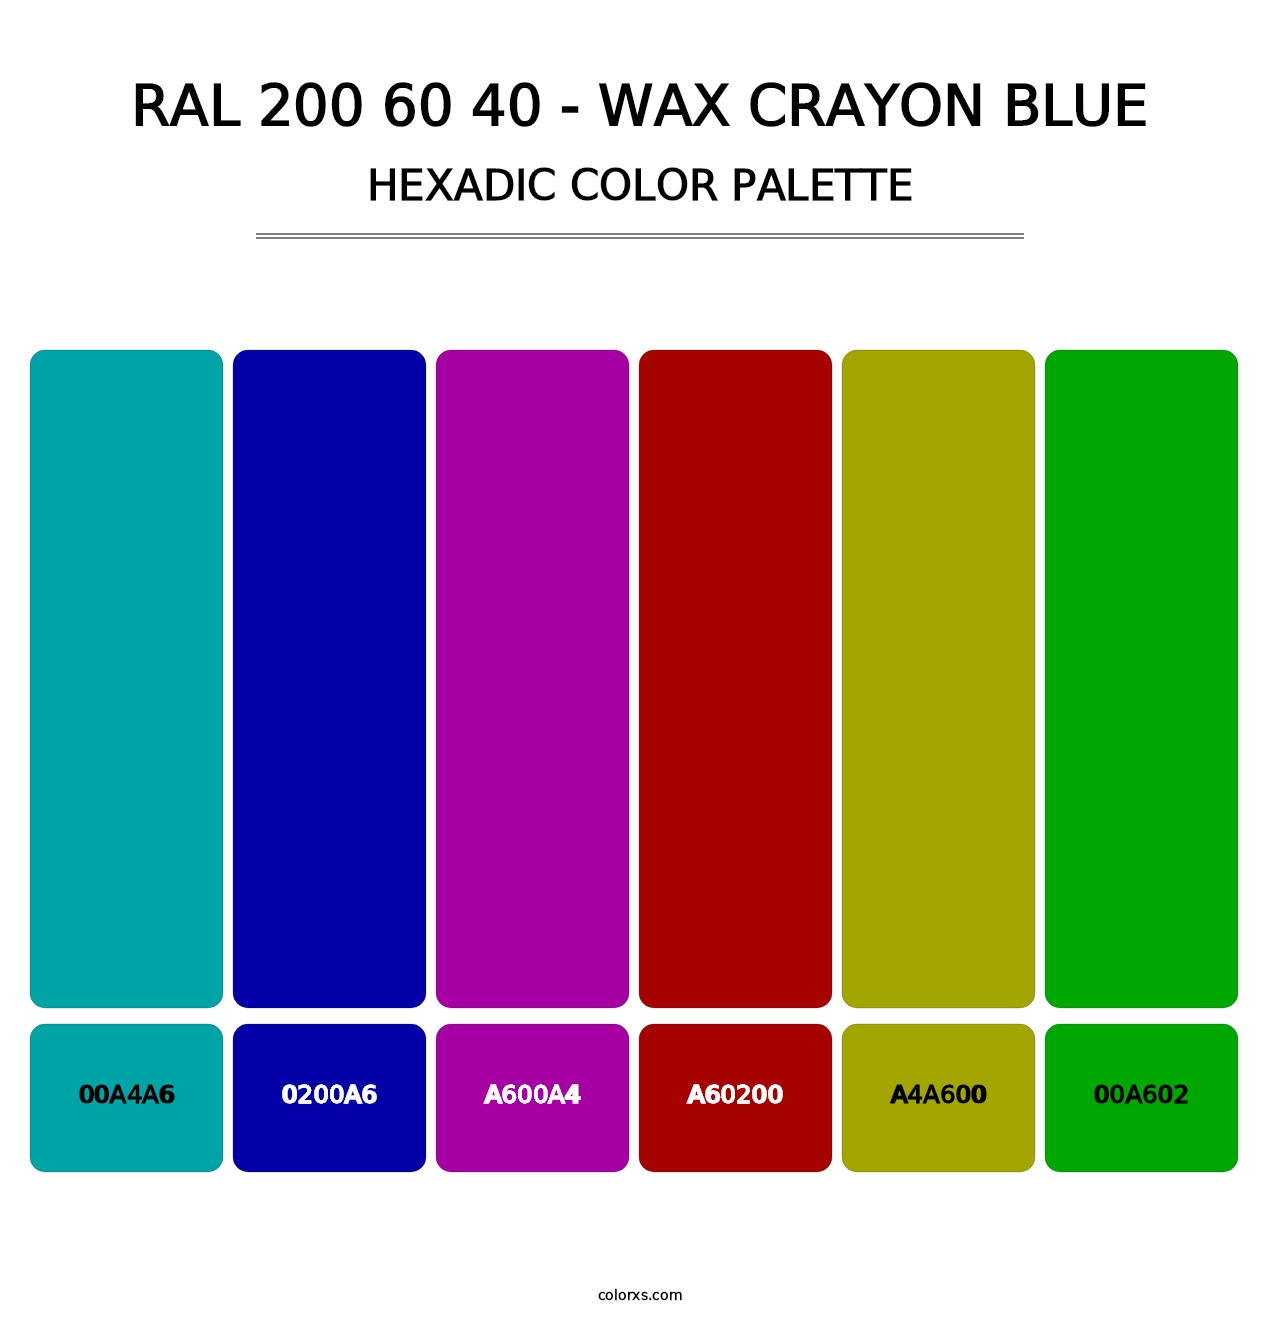 RAL 200 60 40 - Wax Crayon Blue - Hexadic Color Palette